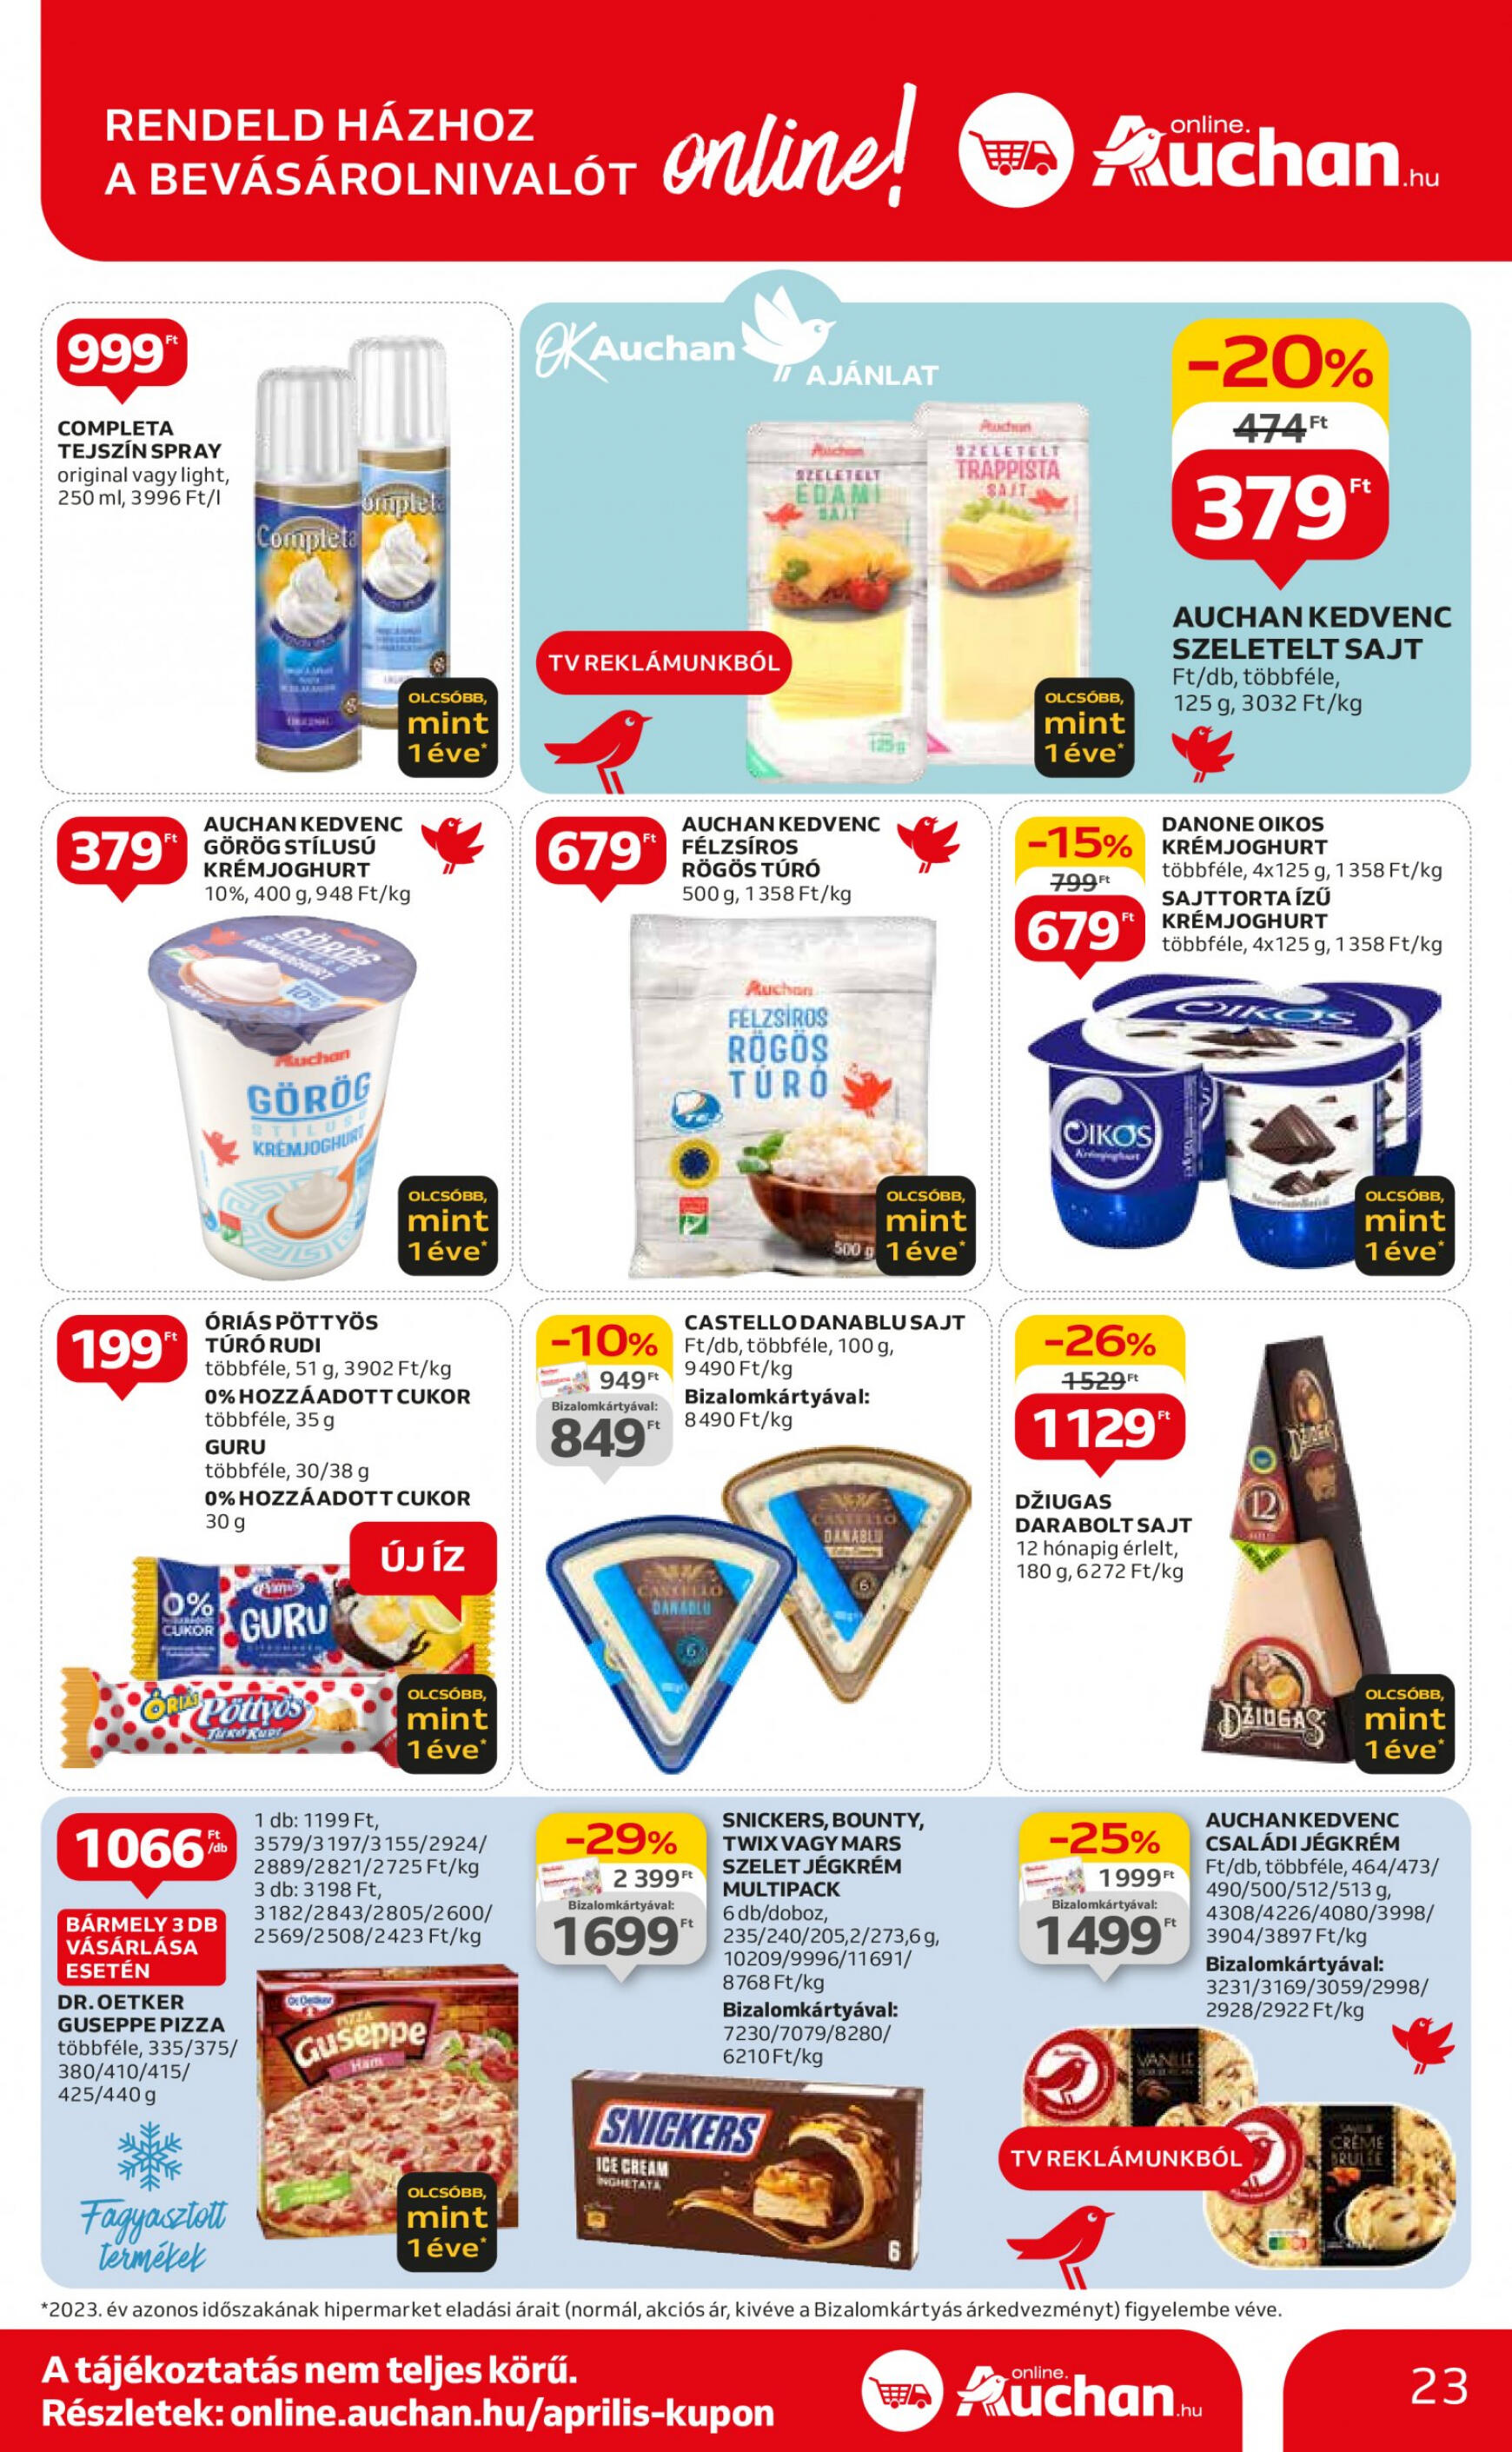 auchan - Aktuális újság Auchan 04.25. - 04.30. - page: 23